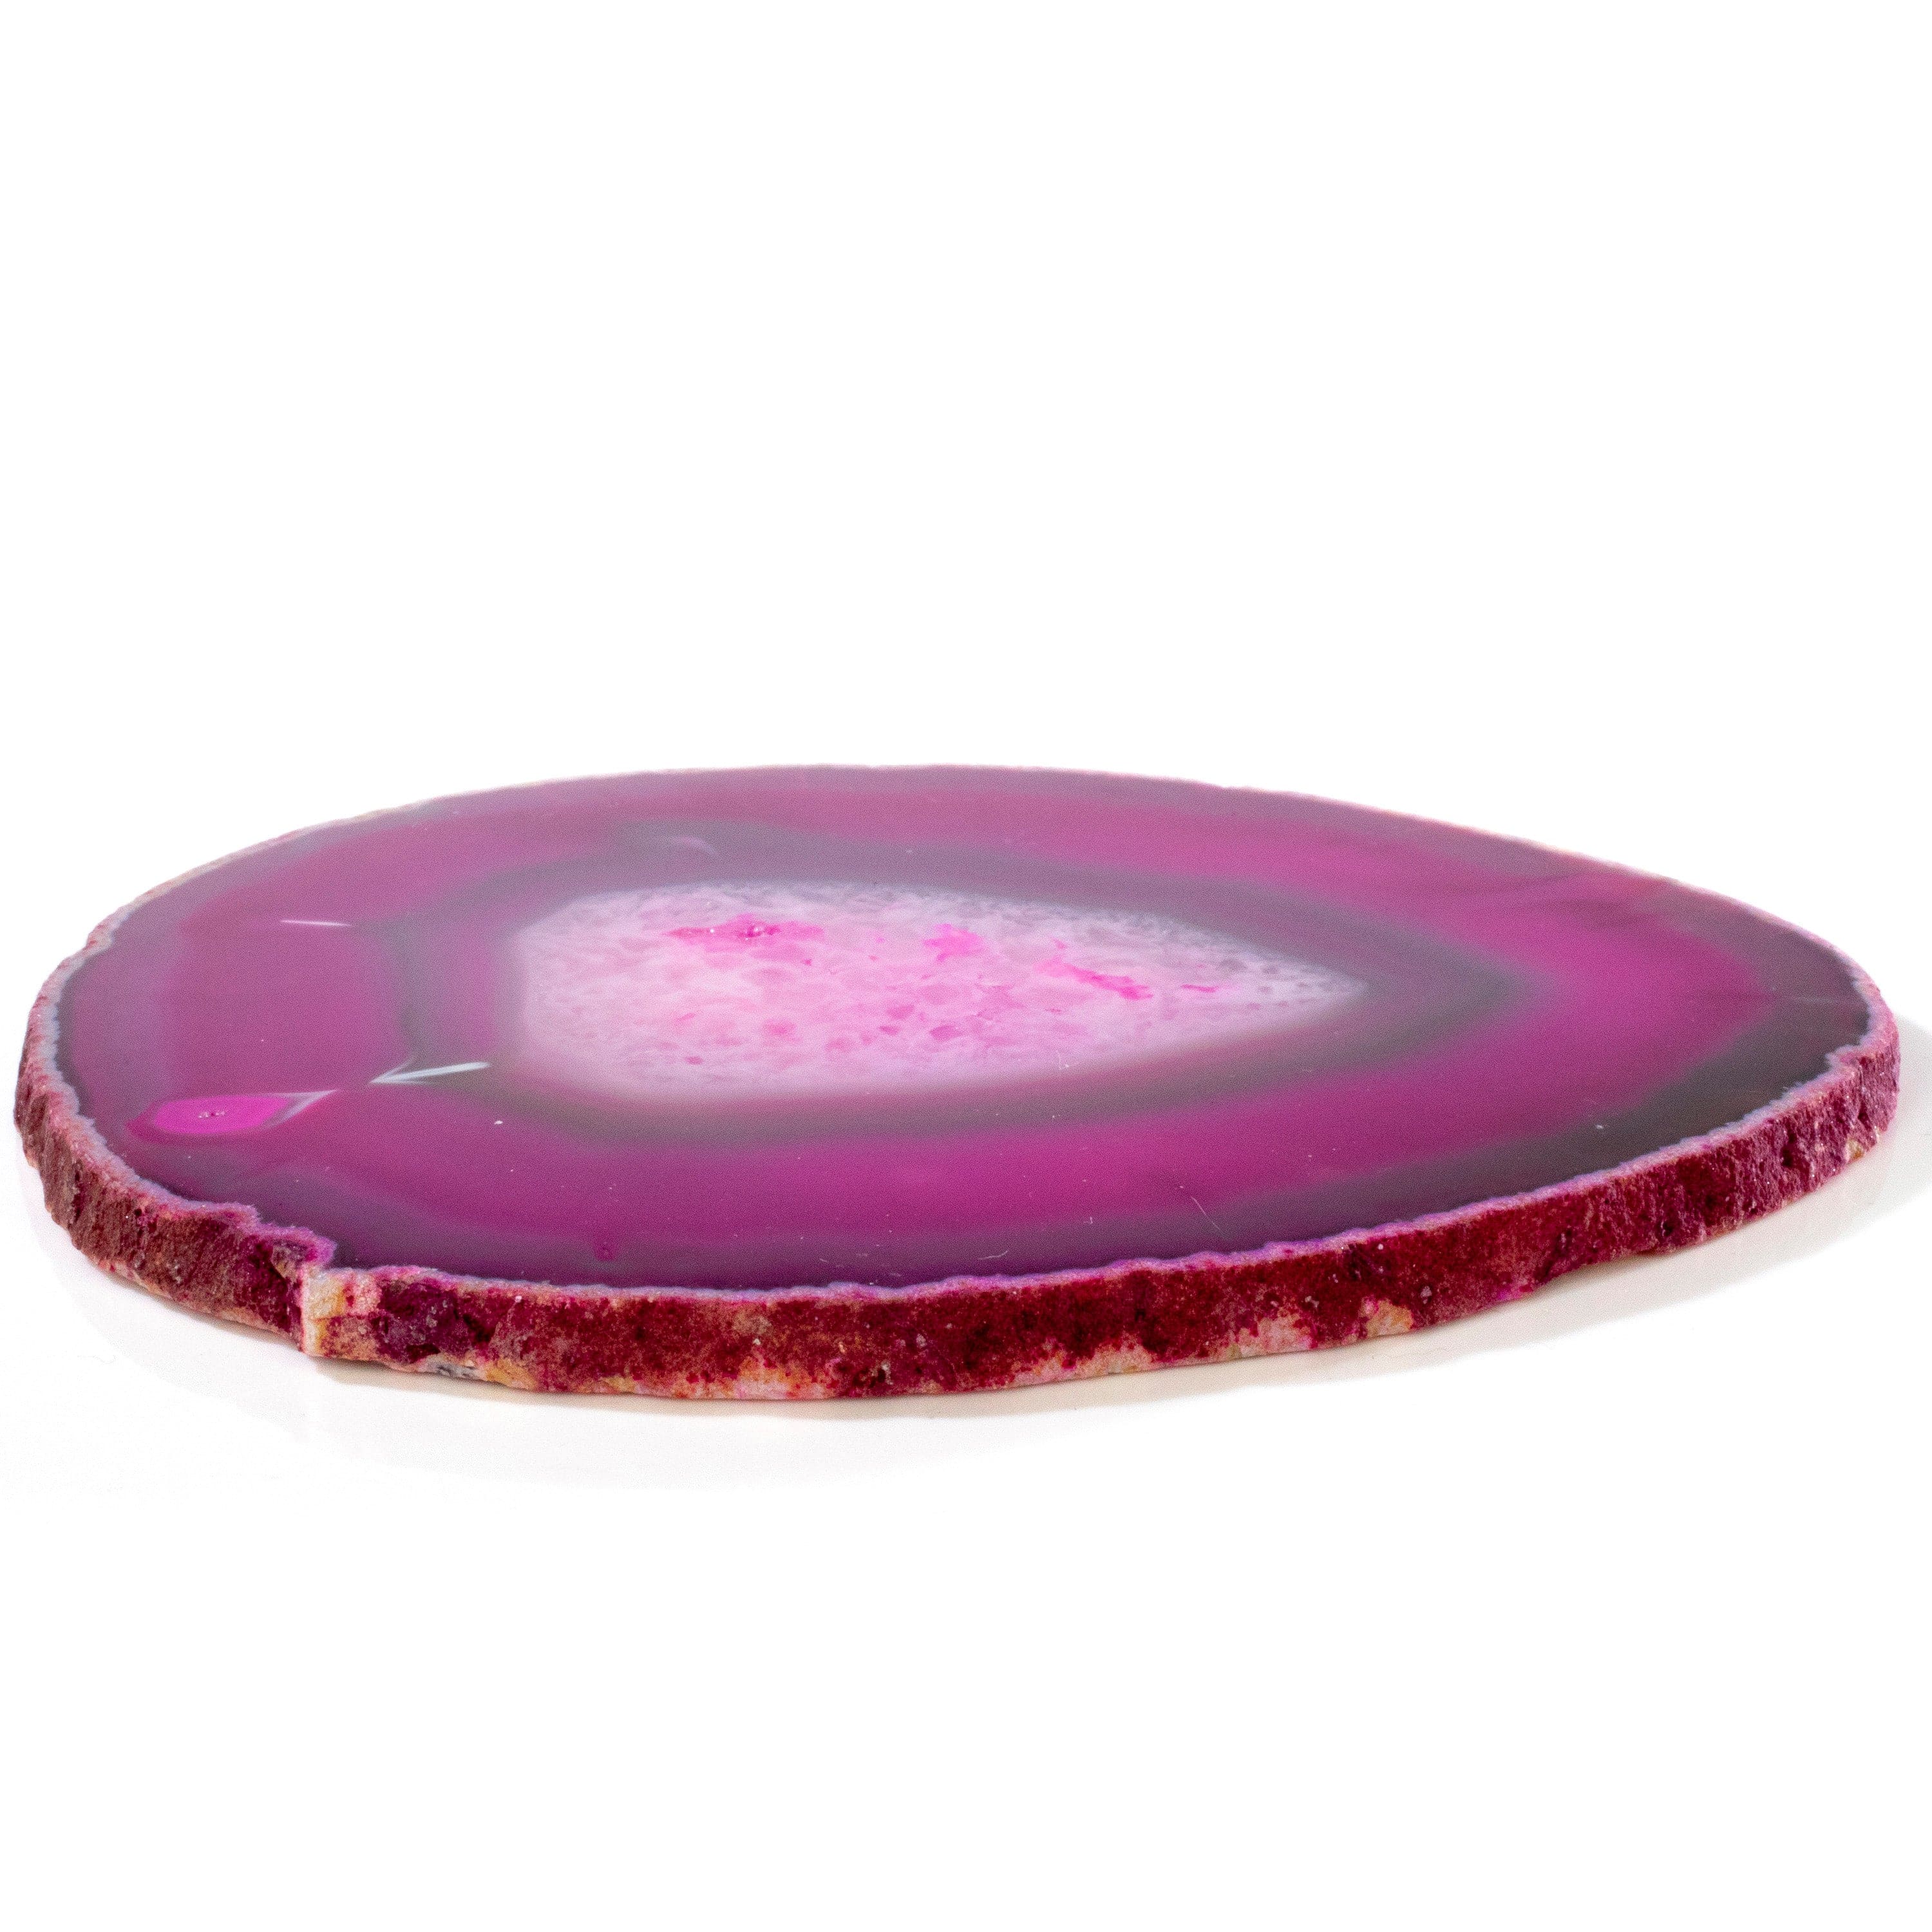 KALIFANO Pink Agate Slice Drink Coaster BAS160-PK